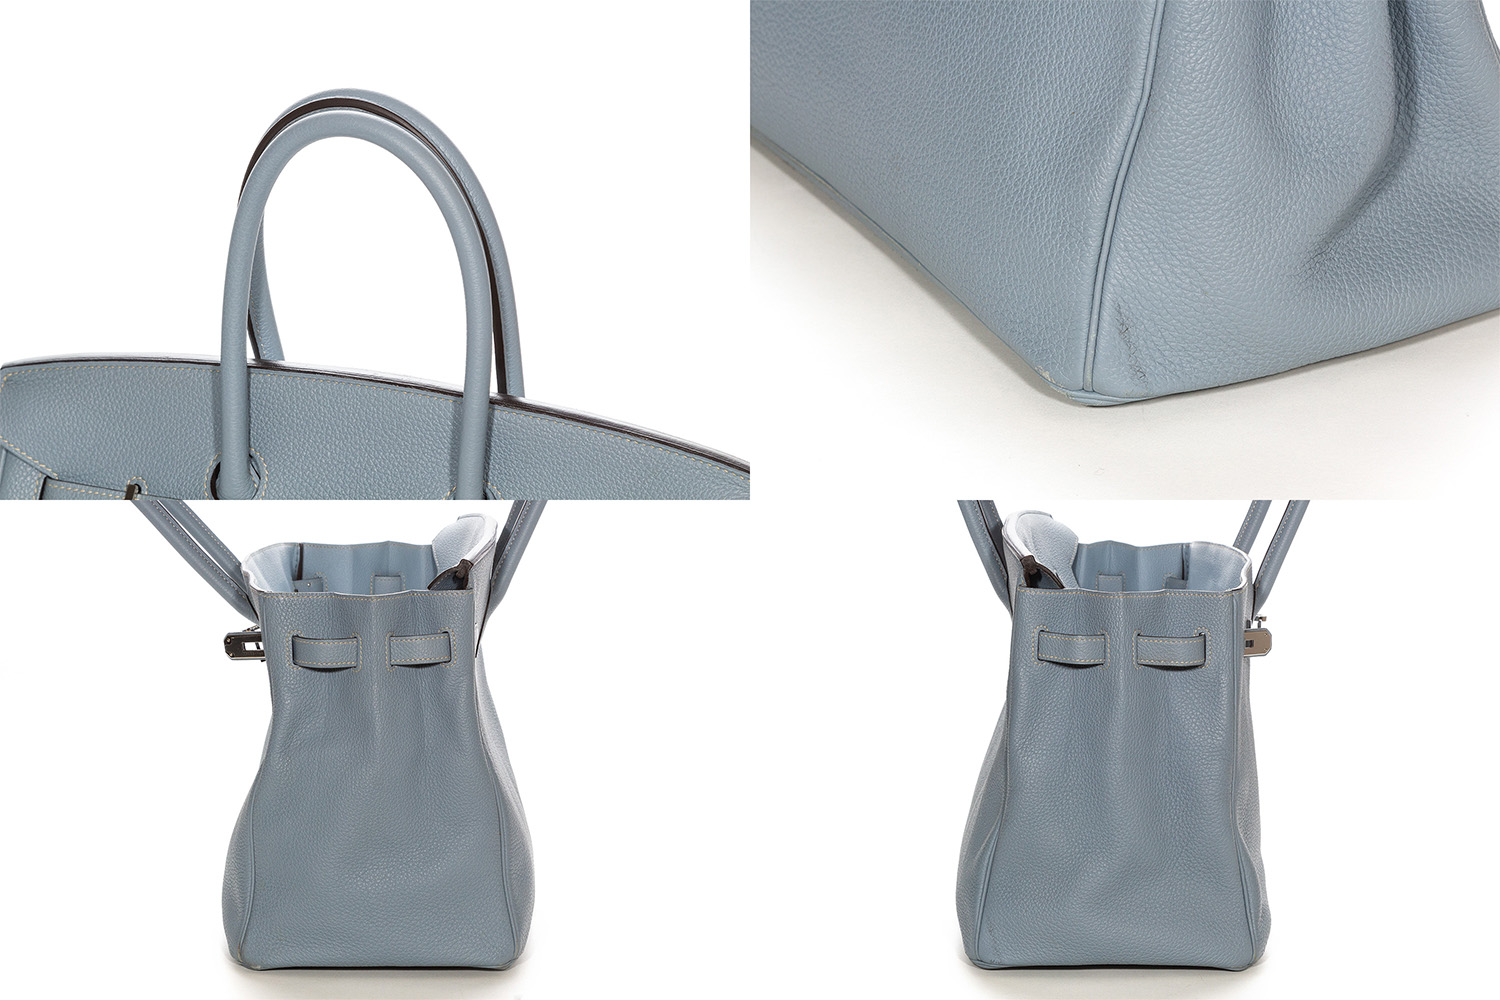 Hermes 35cm Blue Lin Togo Leather Birkin Bag with Palladium, Lot #58081